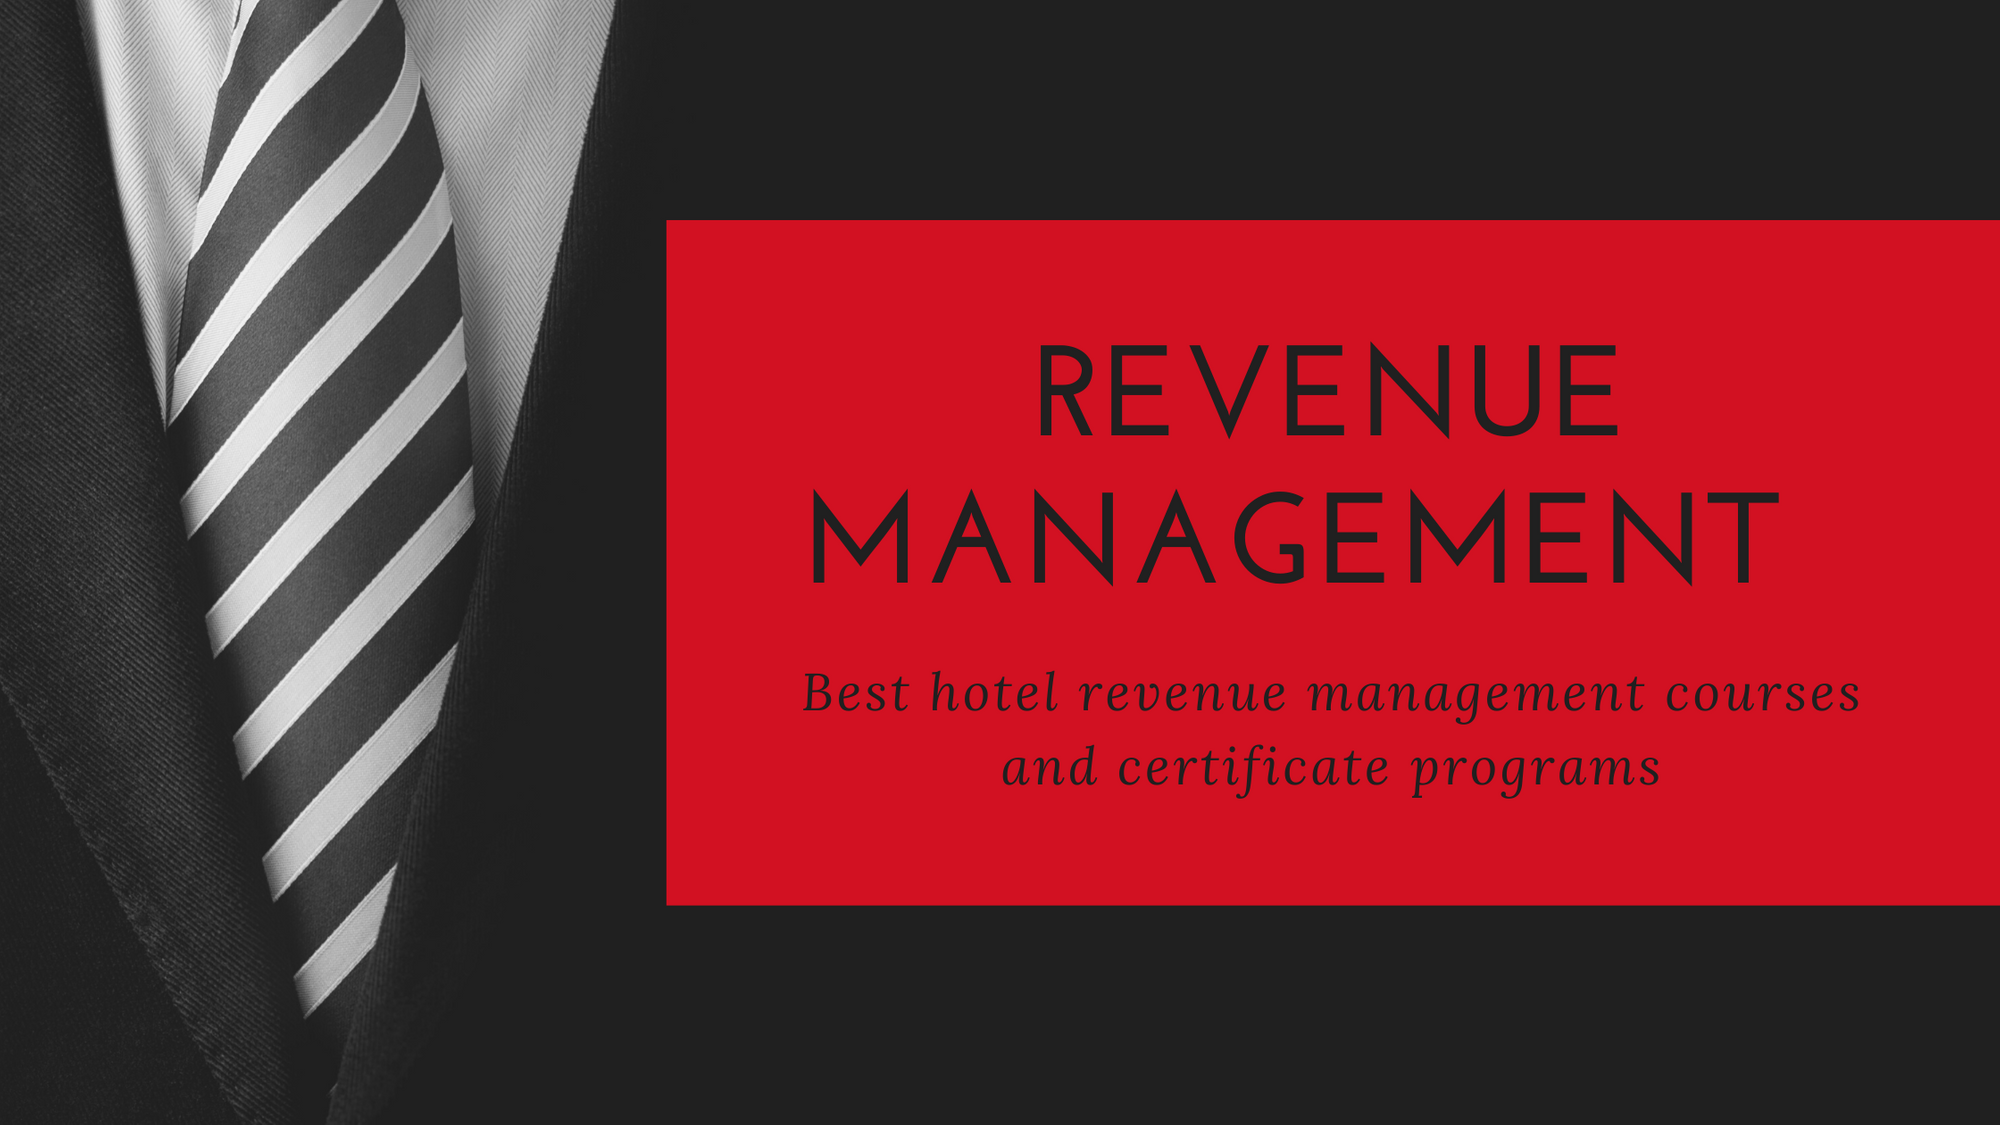 Best hotel revenue management courses and certificate programs